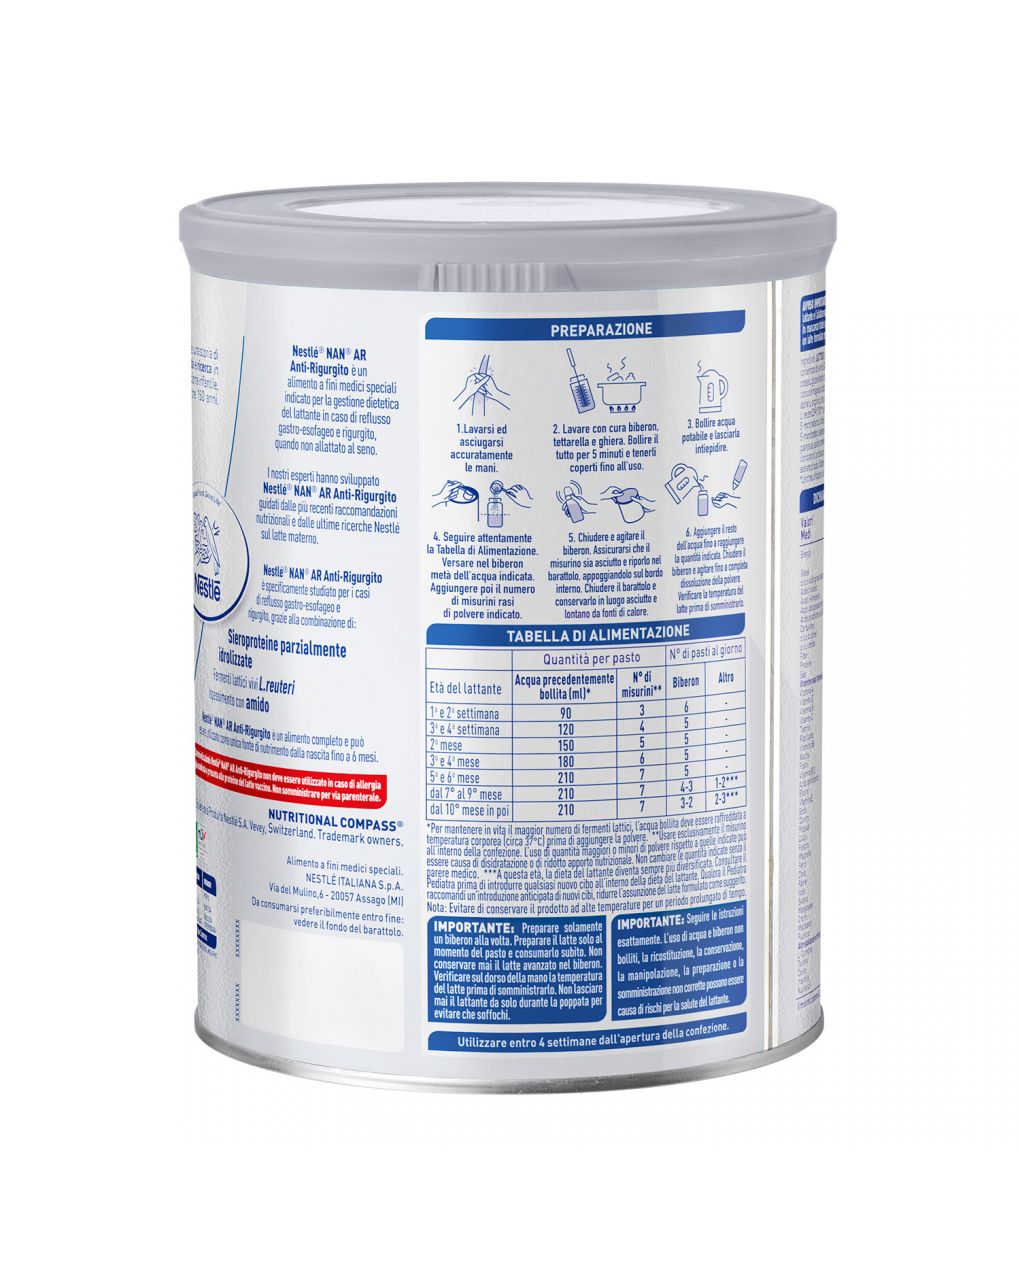 Nestlè - Latte Nidina Anti-Rigurgito 1 polvere 800g - Prénatal